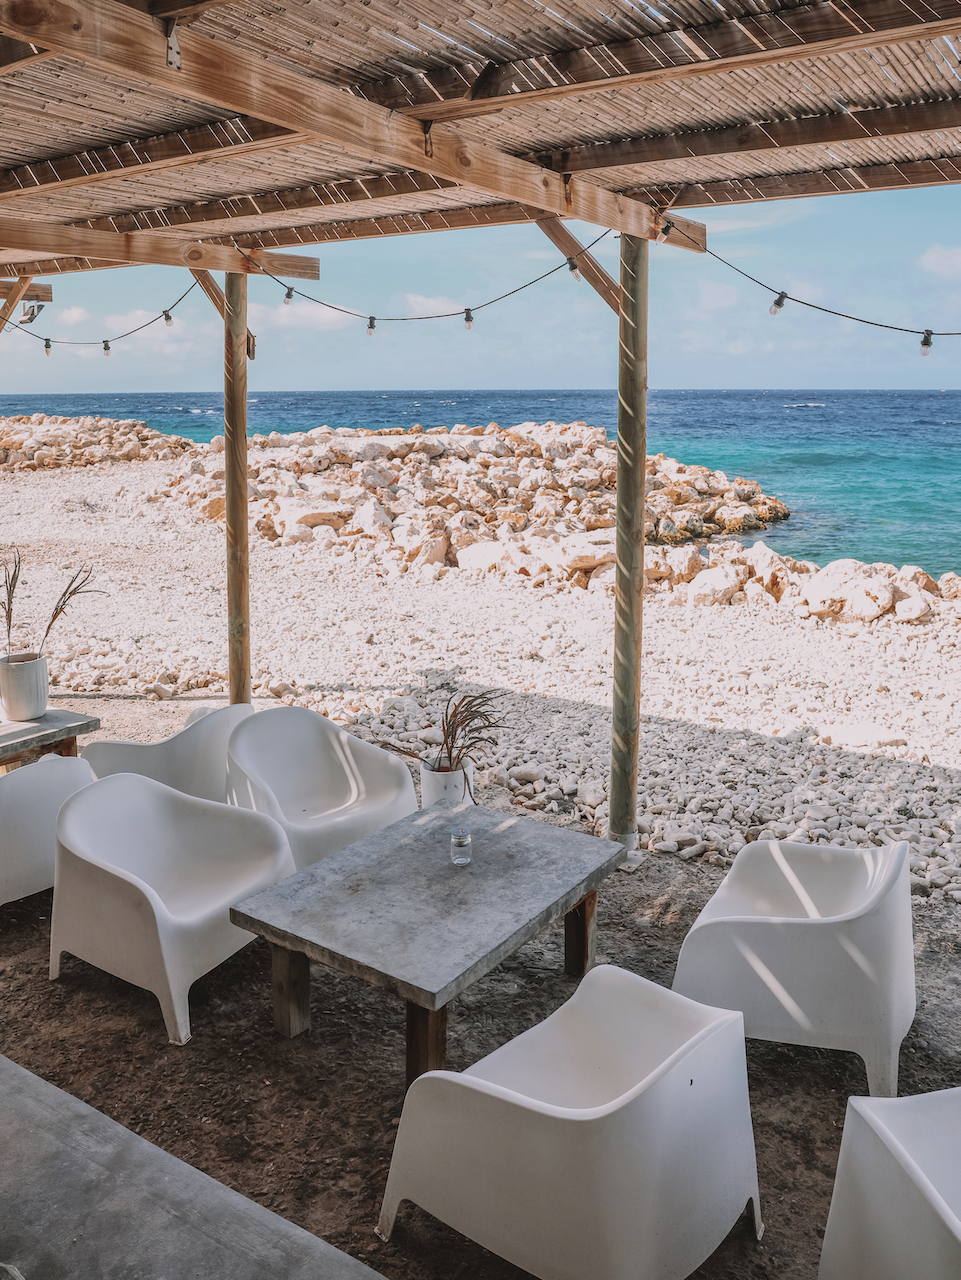 The beach chairs at Bij Blauw restaurant - Willemstad - Curaçao - ABC Islands